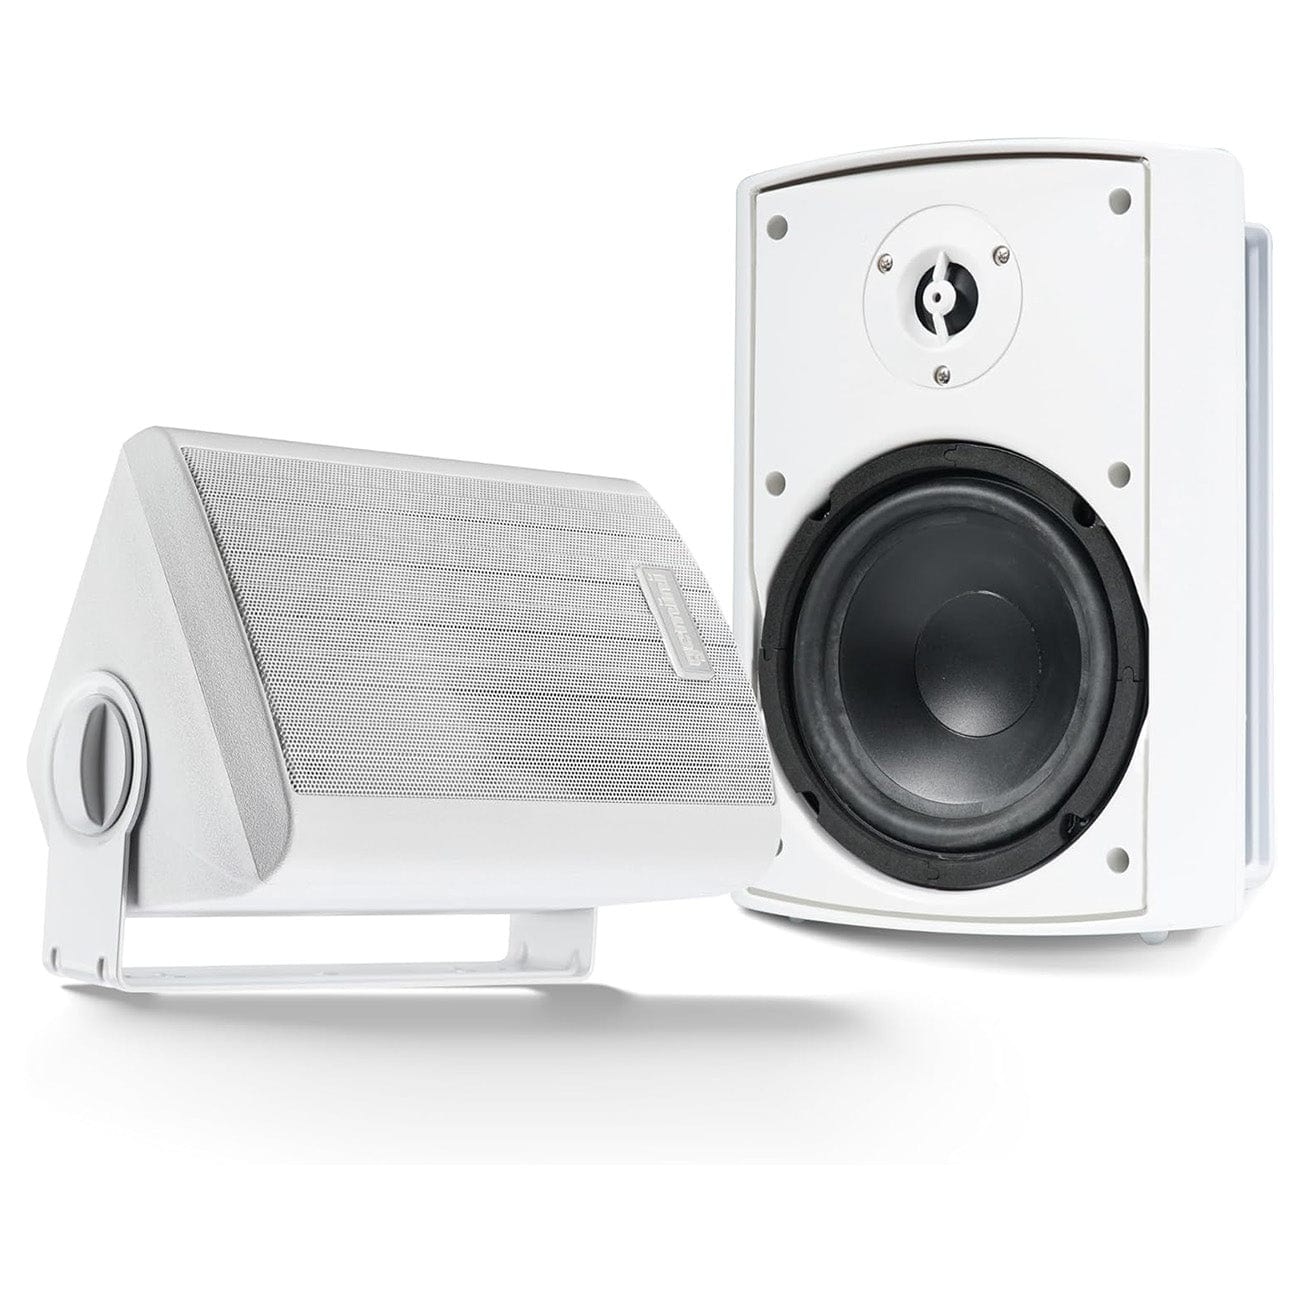 Gemini Sound GHSI-W400BT-PR-WHT Outdoor Wall Mount Speakers